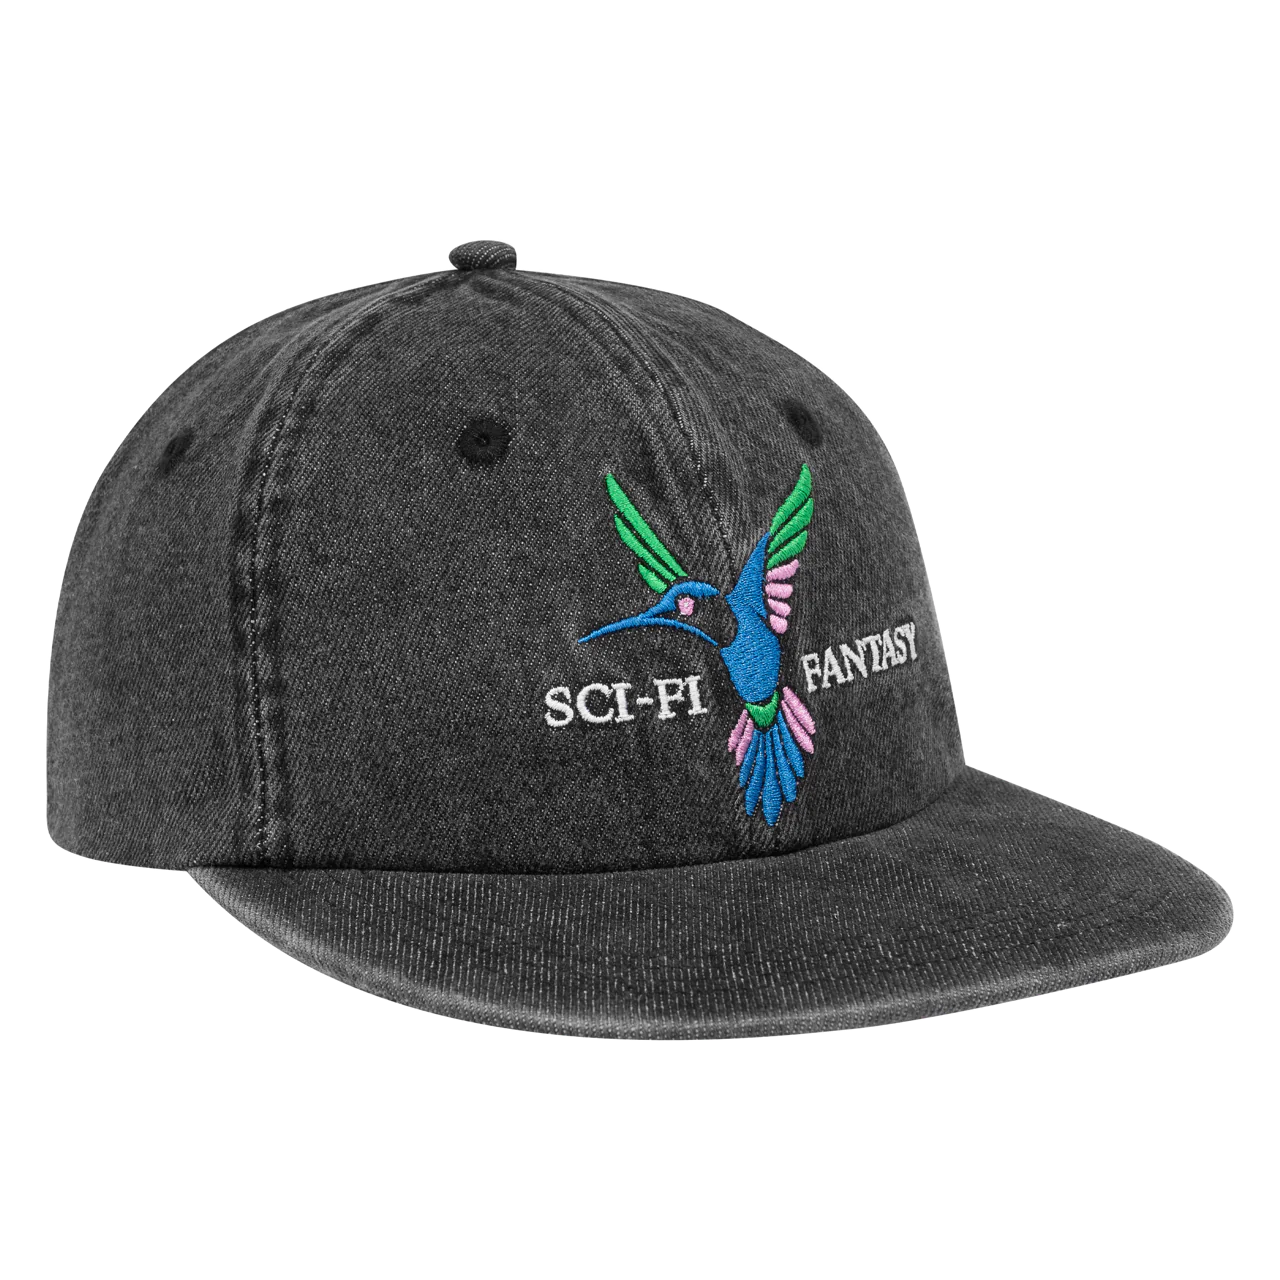 SCI-FI FANTASY - HUMMING BIRD CAP "Denim Black"